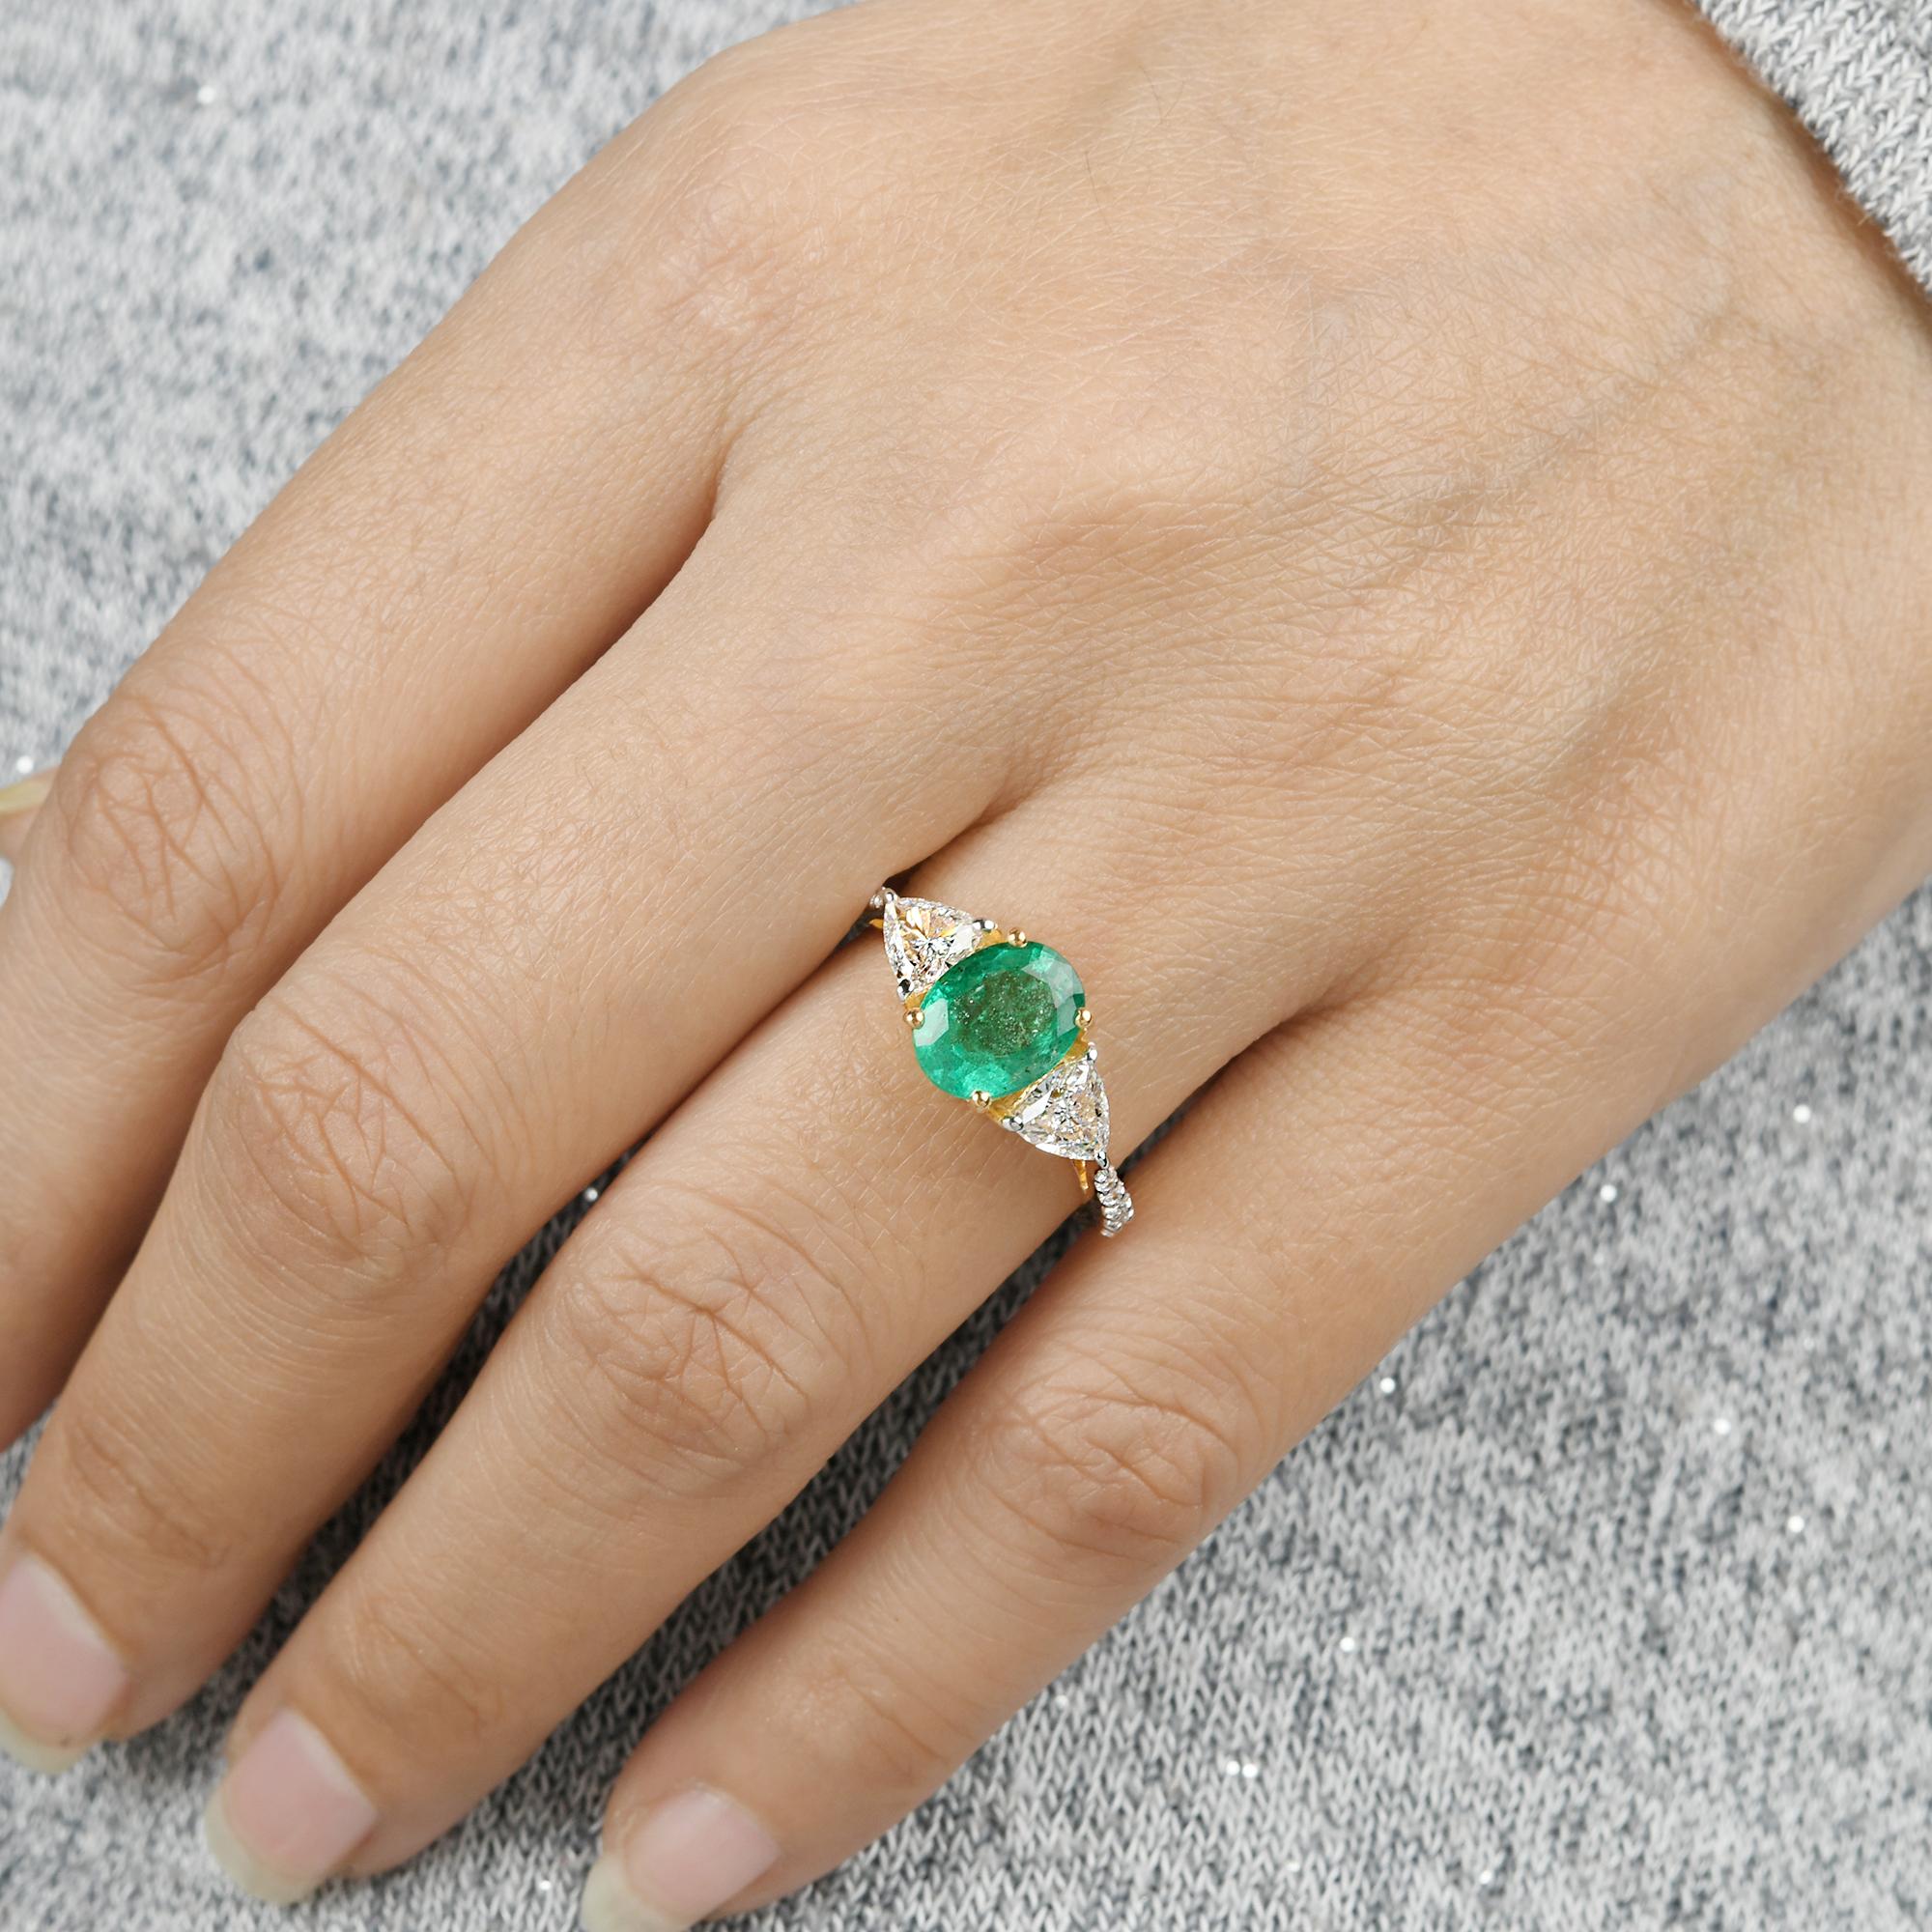 Oval Cut Oval Emerald Gemstone Ring Diamond 18 Karat Yellow Gold Handmade Fine Jewelry For Sale